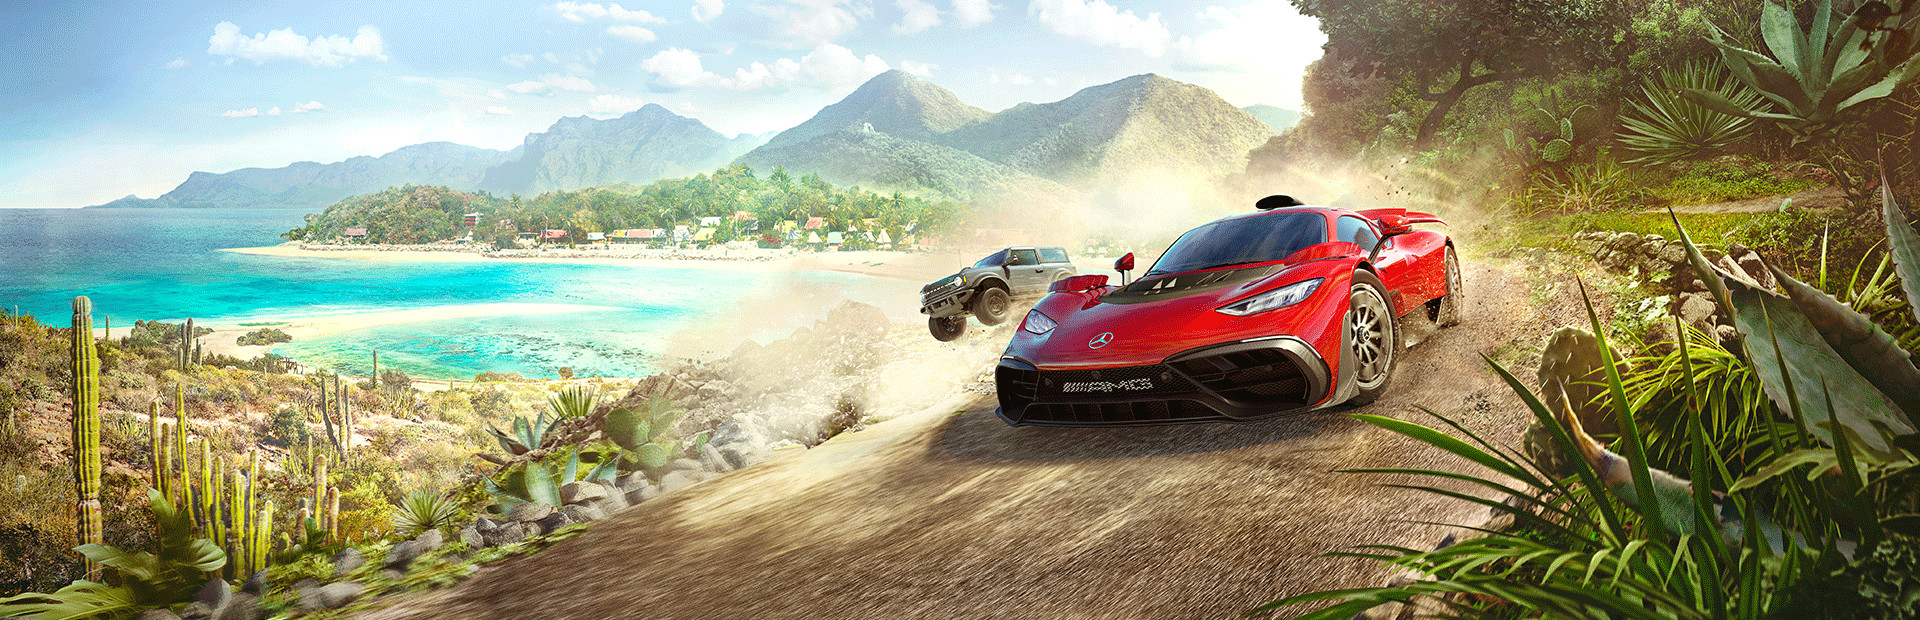 Forza Horizon 5 cover image